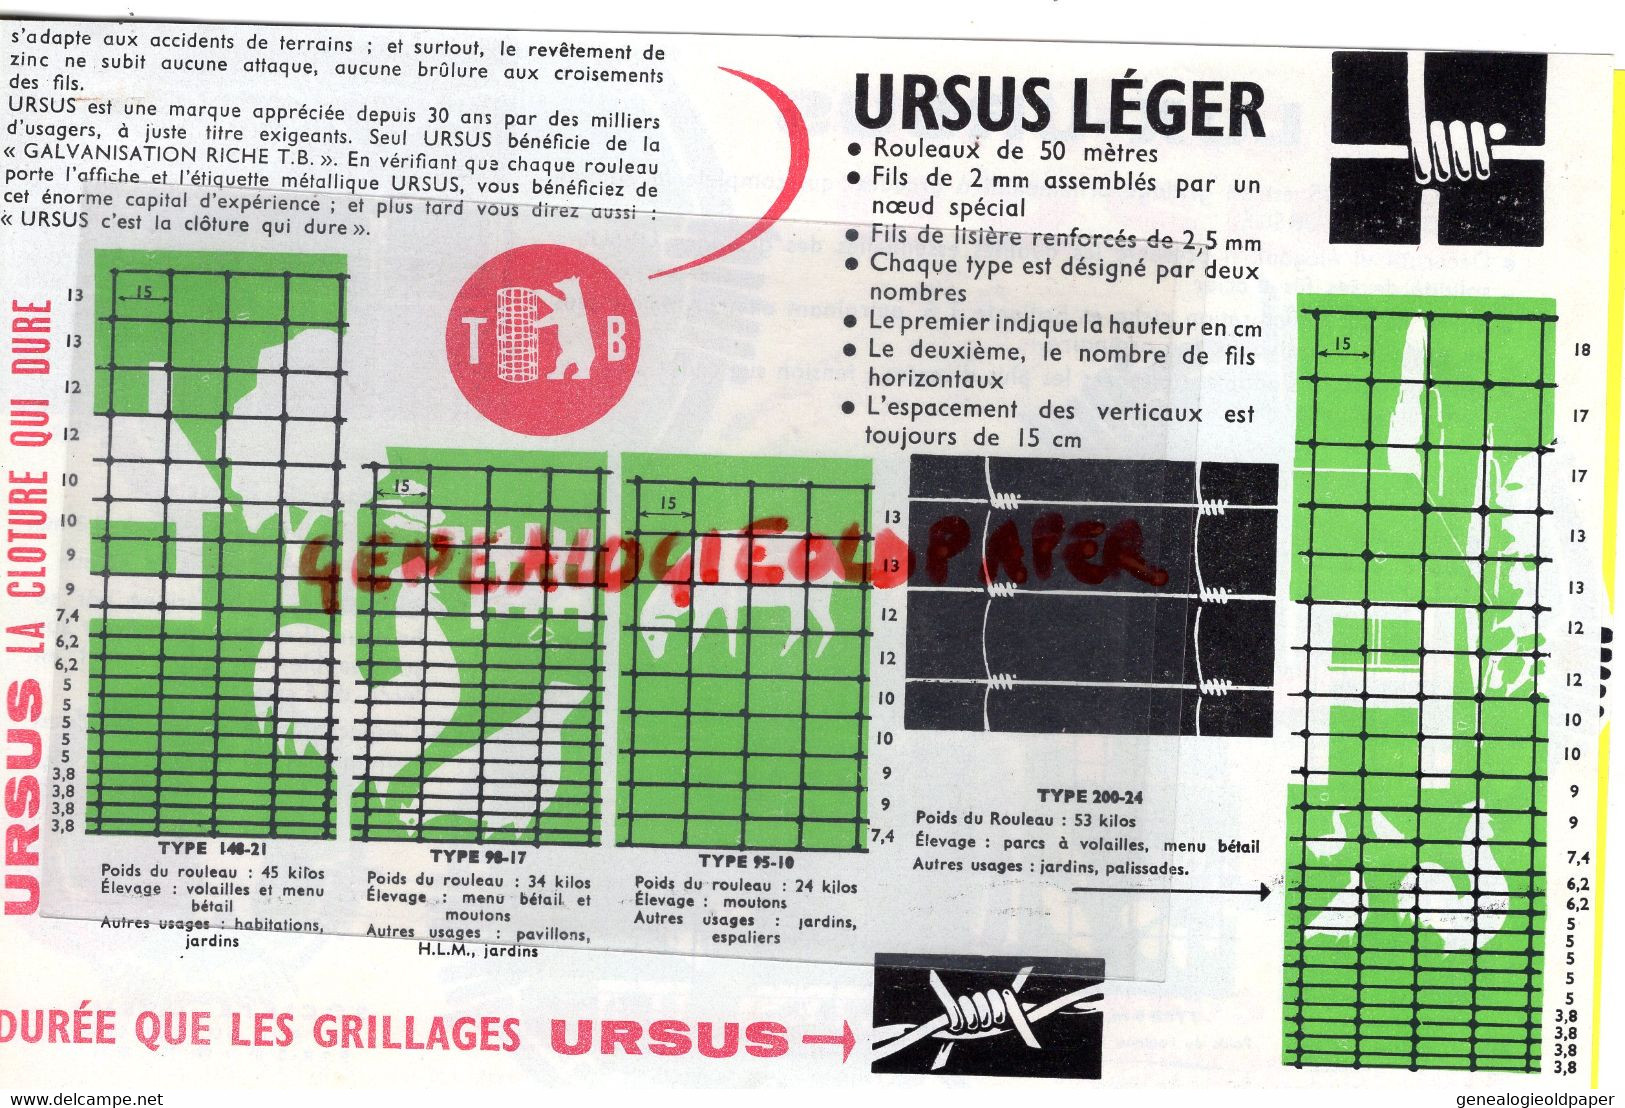 45- AMILLY MONTARGIS 75-PARIS- CATALOGUE CLOTURE AGRICULTURE TREILLAGE URSUS + TARIF 1962-GRILLAGES - 17 RUE DU COLISEE - Landwirtschaft